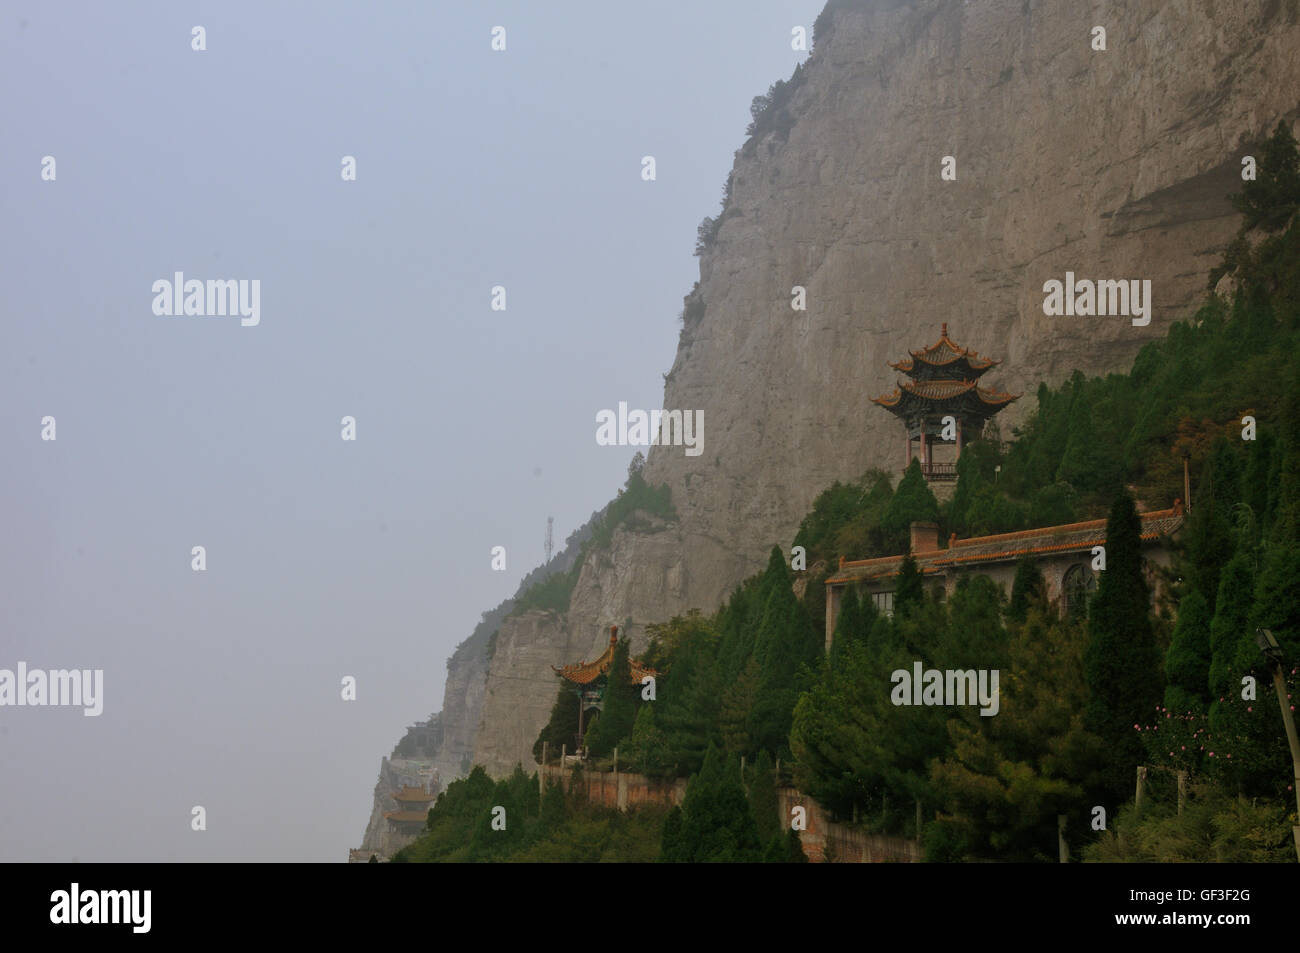 Buddhist Temple Along the Cliff Face at Mianshan, Shanxi, China Stock Photo